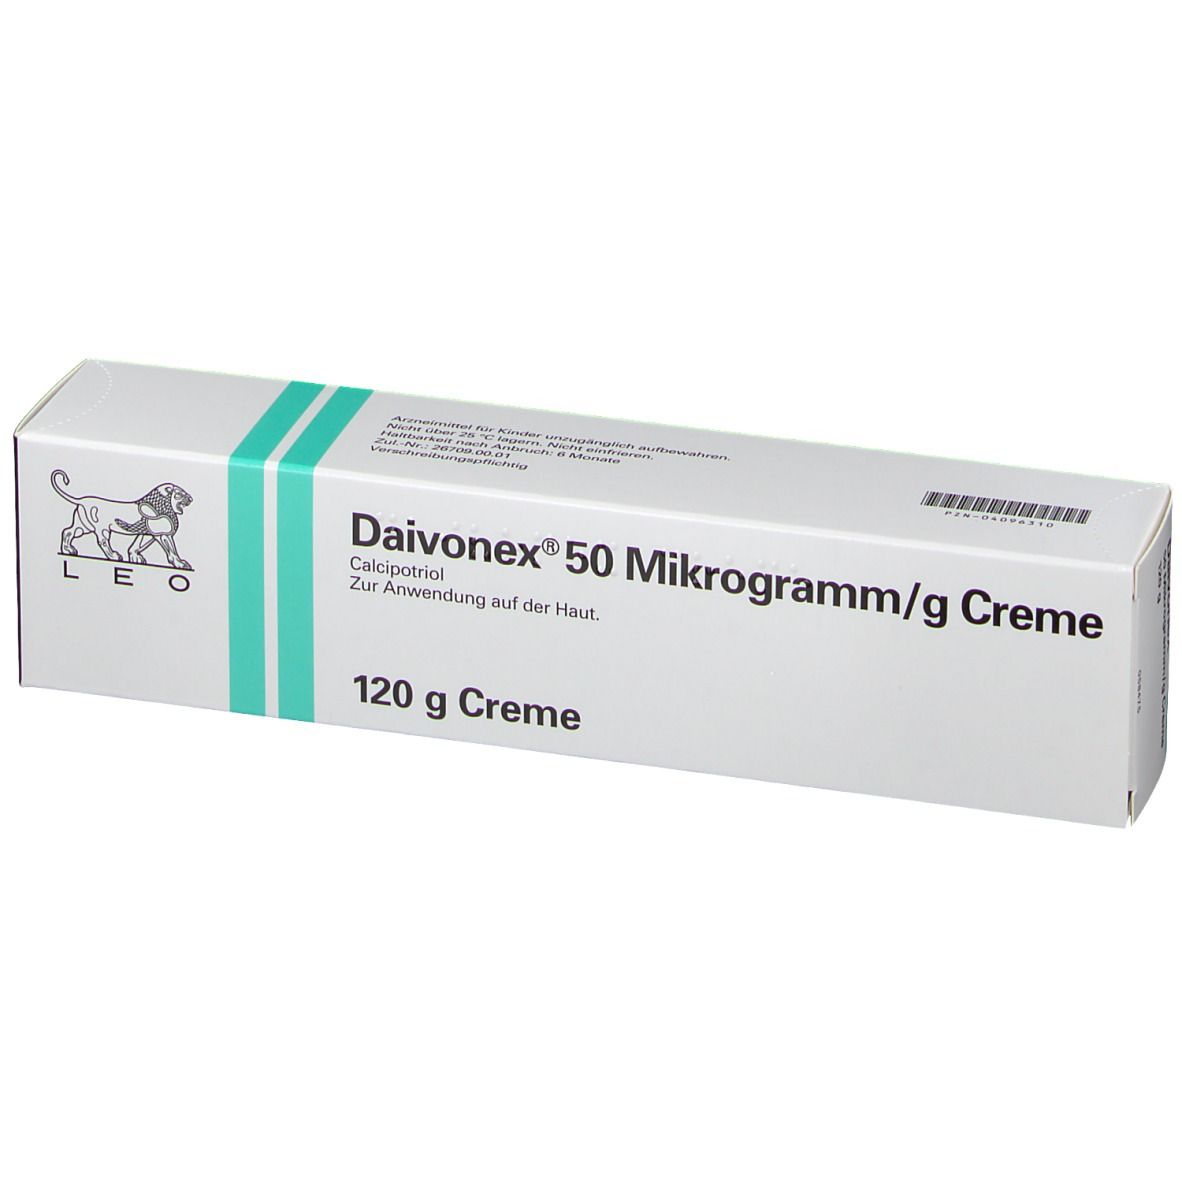 Daivonex® Creme